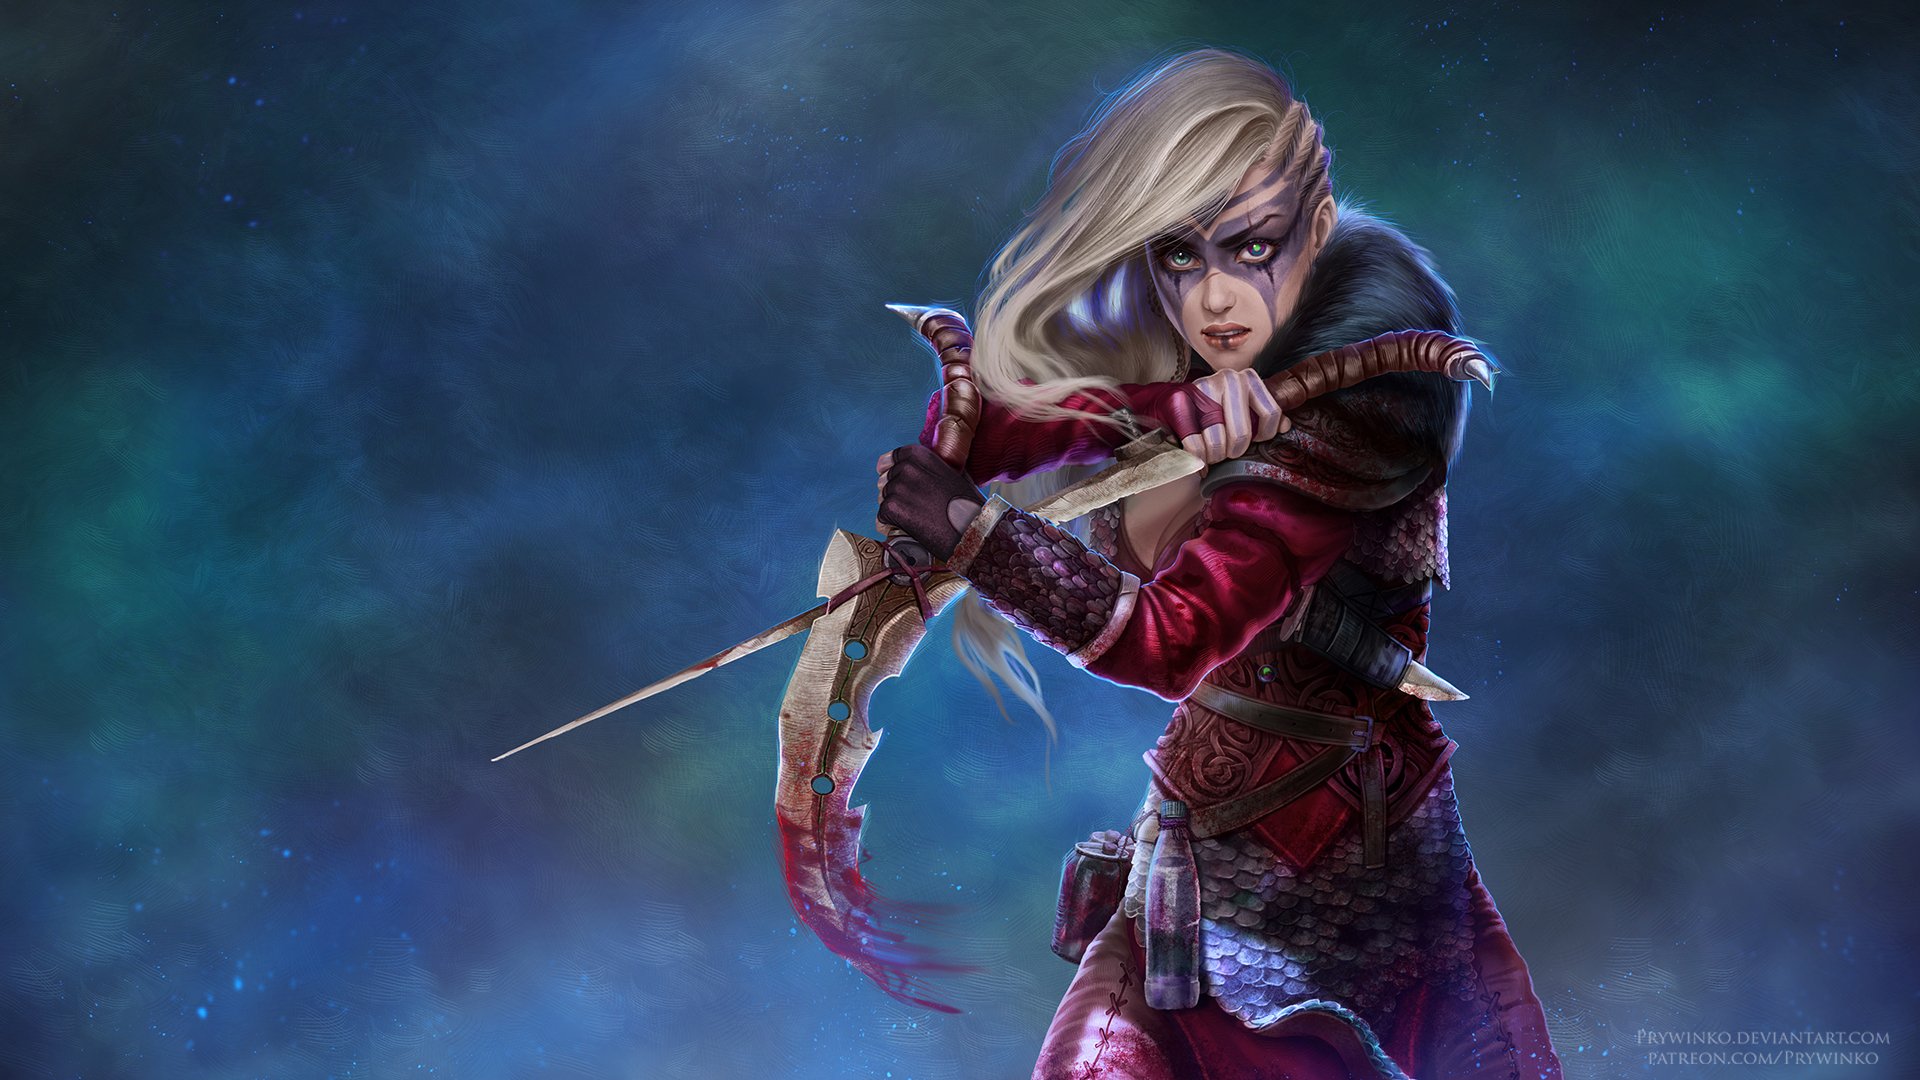 Download Heterochromia Dagger Blonde Woman Warrior Fantasy Viking Hd Wallpaper By Prywinko